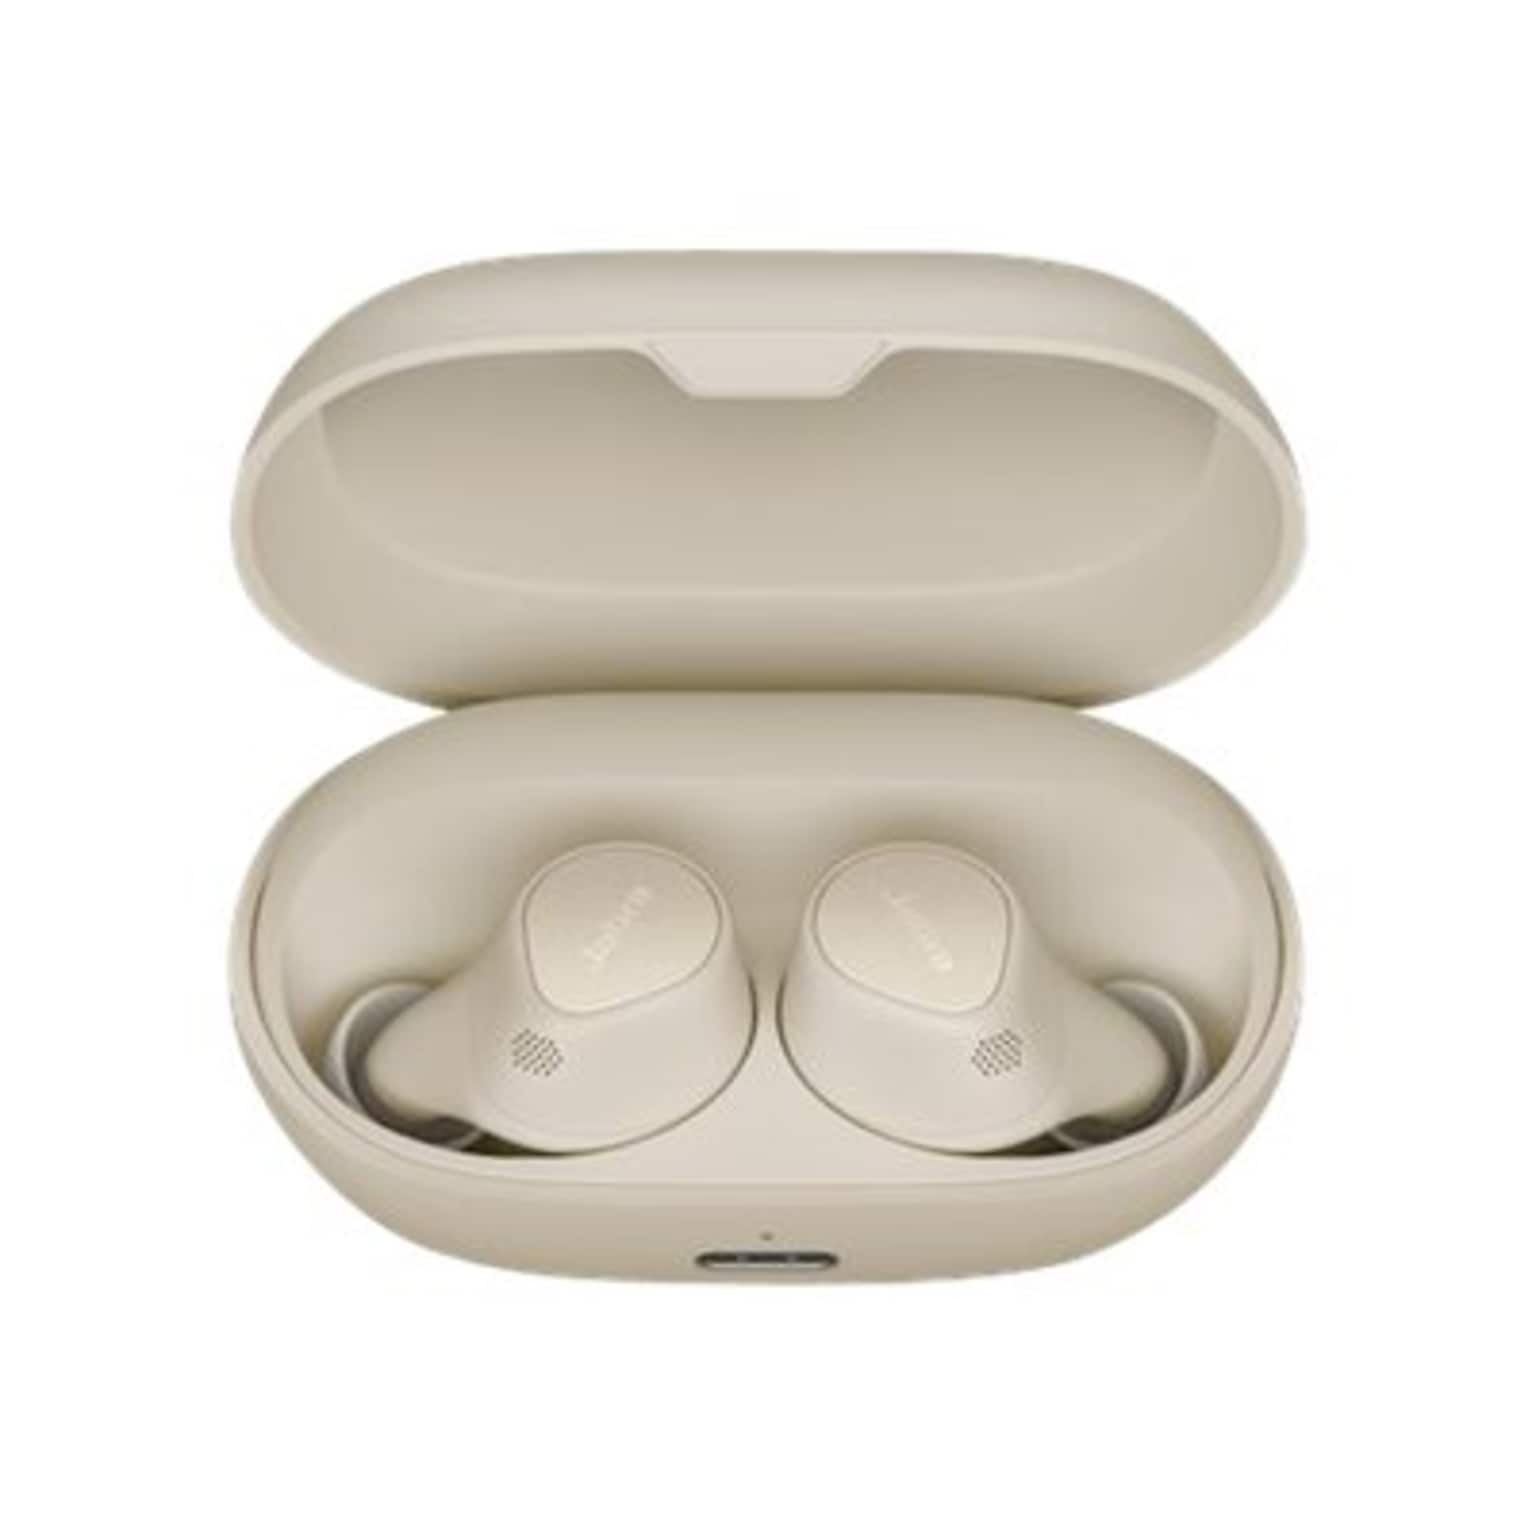 Jabra Elite Wireless Active Noise Canceling Earbuds Headphones, Bluetooth, Gold/Beige (100-99172005-02)